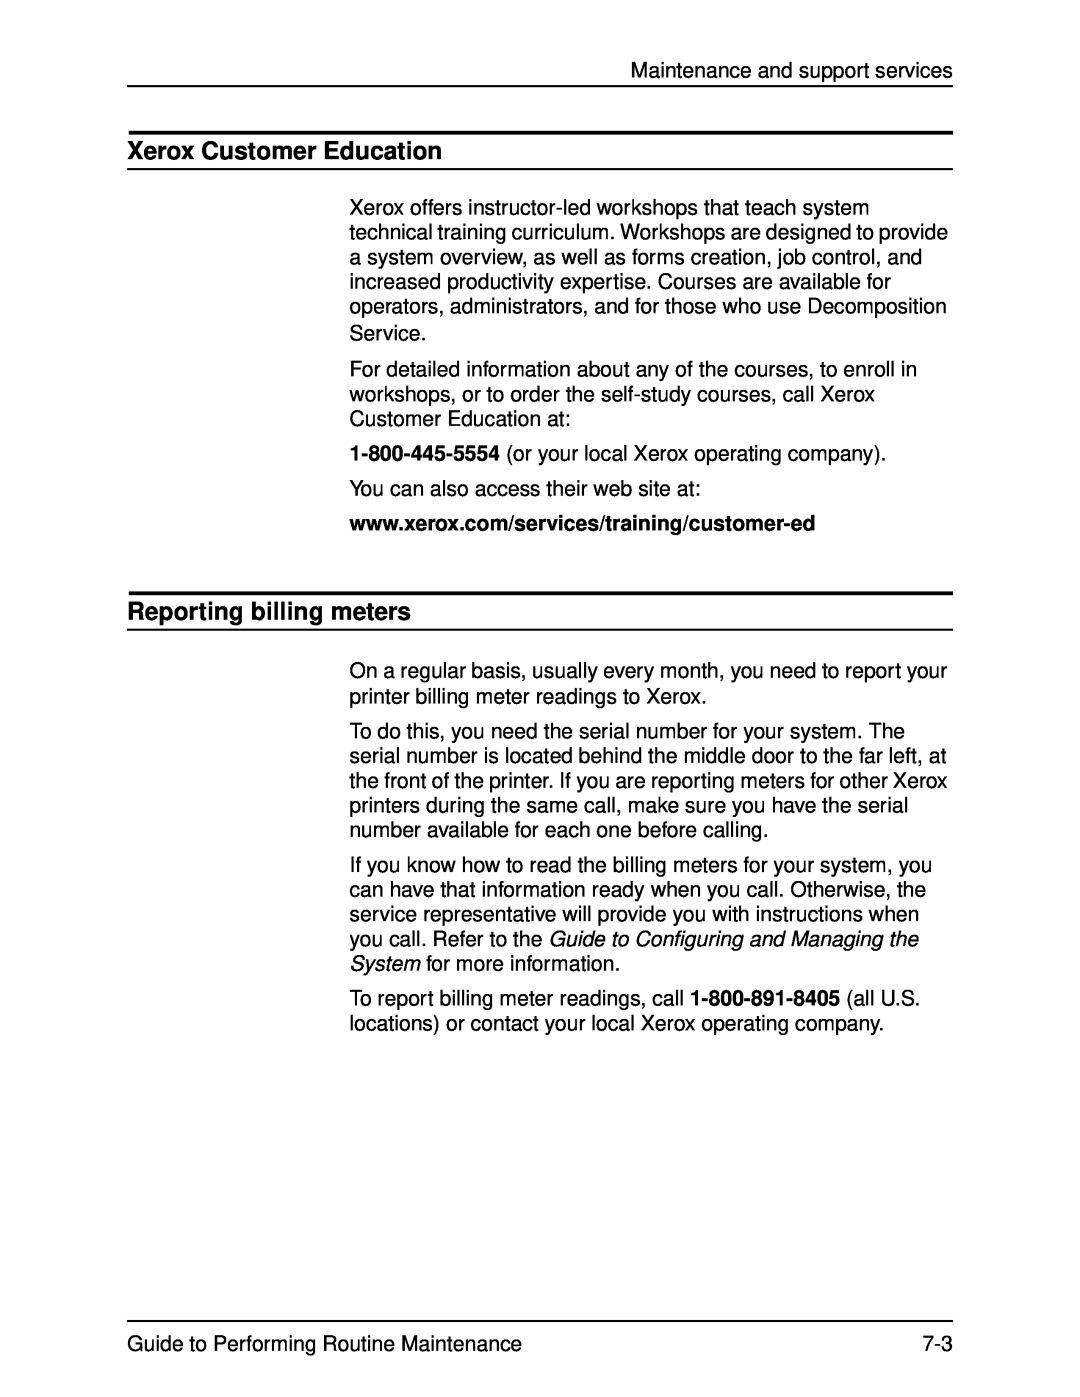 Xerox DocuPrint 96 manual Xerox Customer Education, Reporting billing meters 